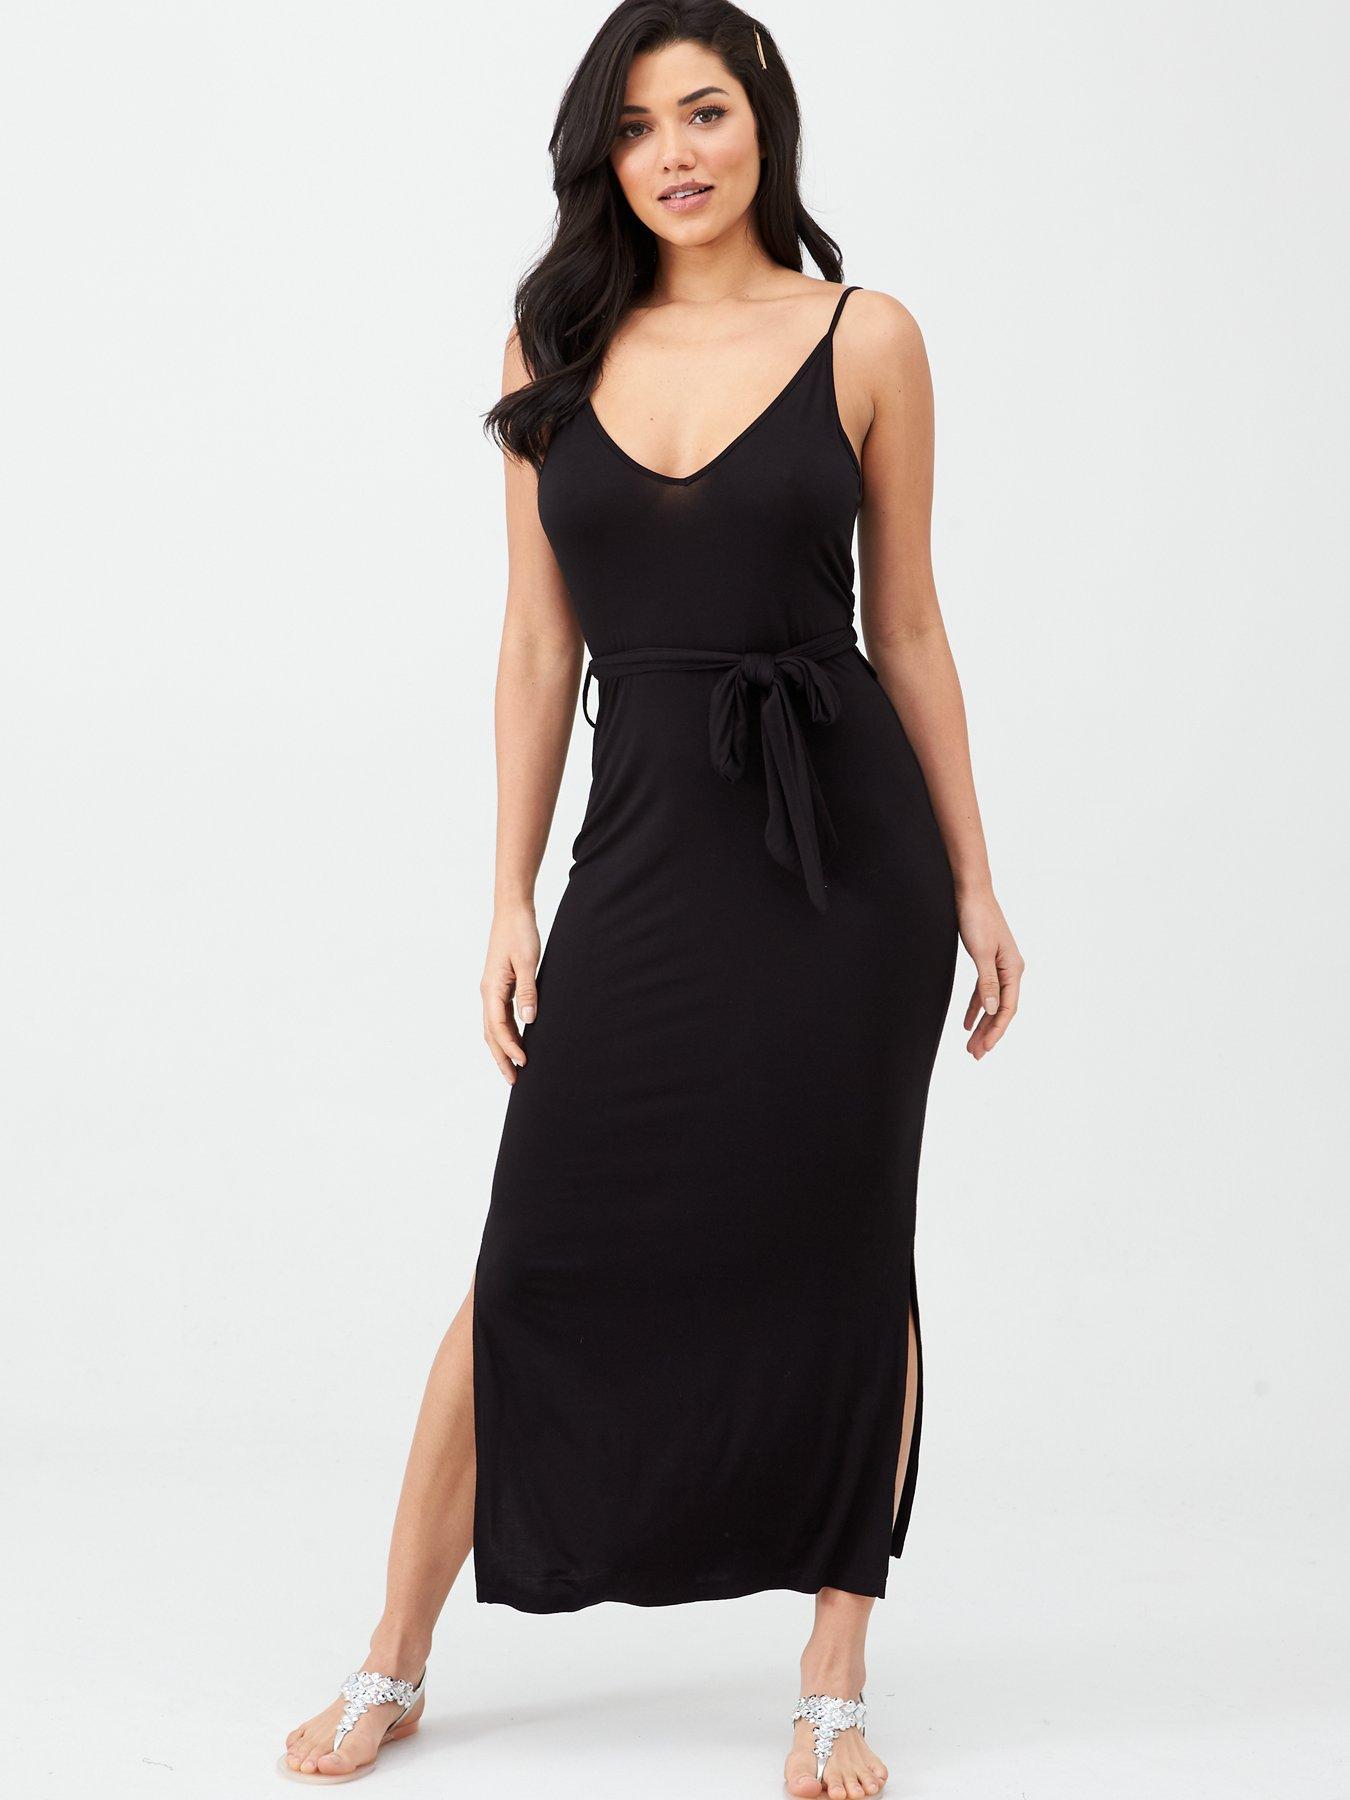 strappy black dress uk